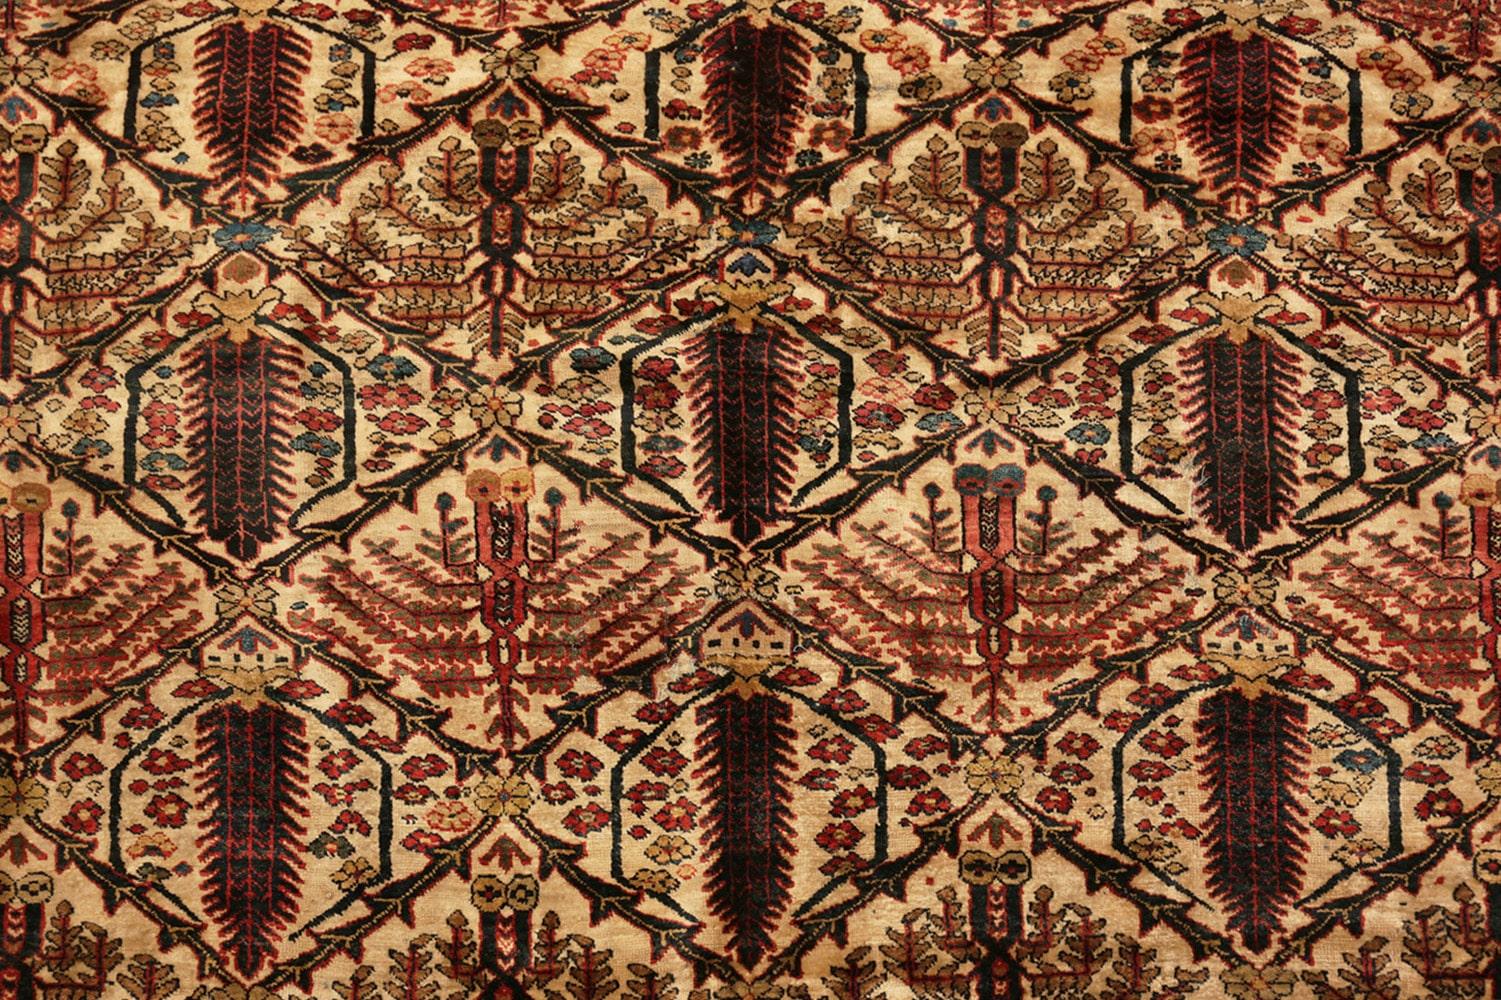 Fine antique Persian Heriz silk rug, country of origin: Persia, date: circa 1880. Size: 4 ft 8 in x 6 ft (1.42 m x 1.83 m)

